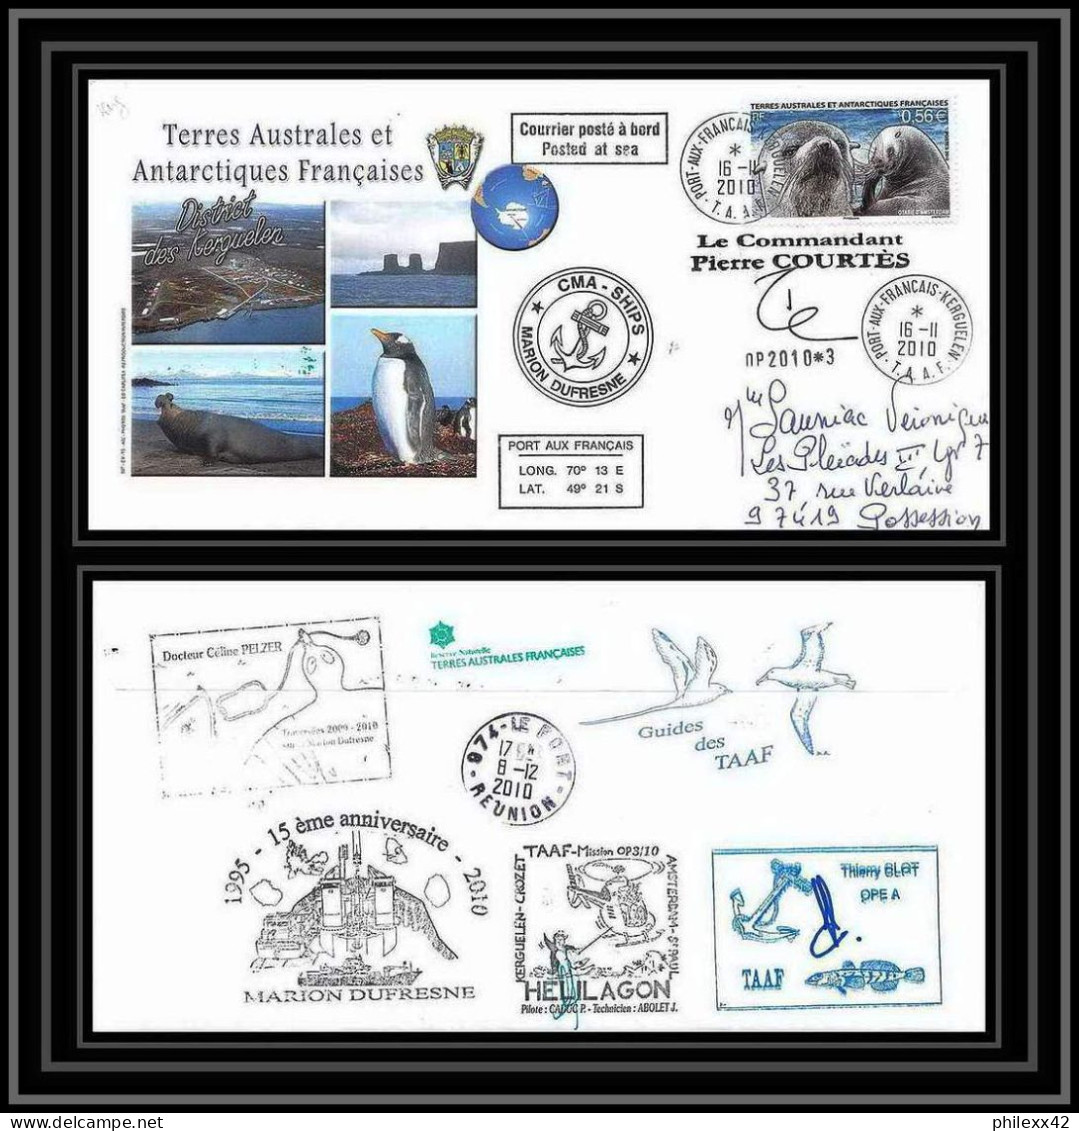 3040 Helilagon Dufresne Signé Signed Op 16/11/2010/3 Kerguelen N°569 Otarie Seal Terres Australes (taaf) Lettre Cover - Elicotteri